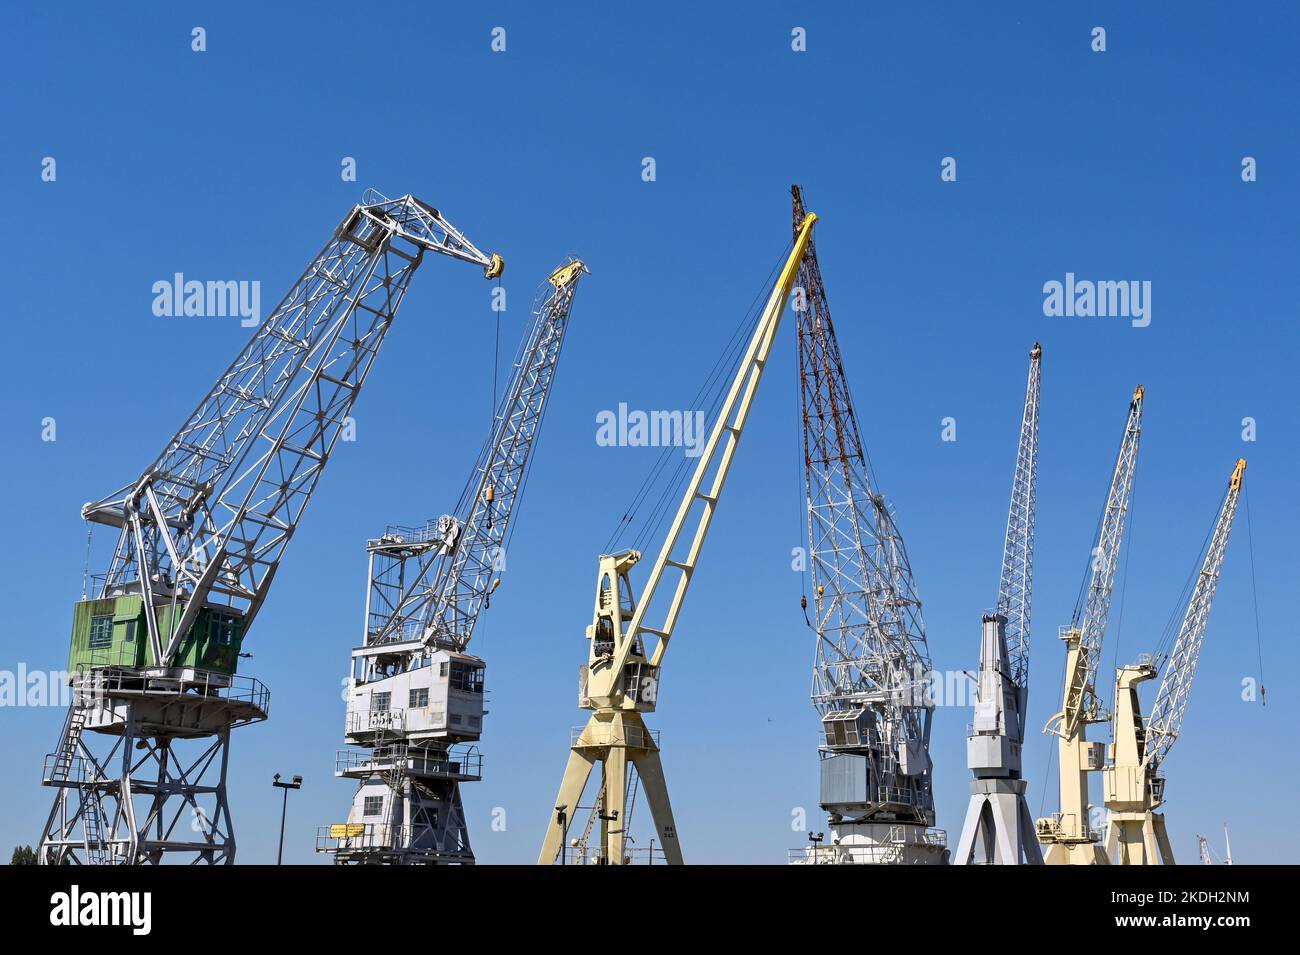 Antwerp, Belgium - August 2022: Row of old cranes in one of the city's docks Stock Photo